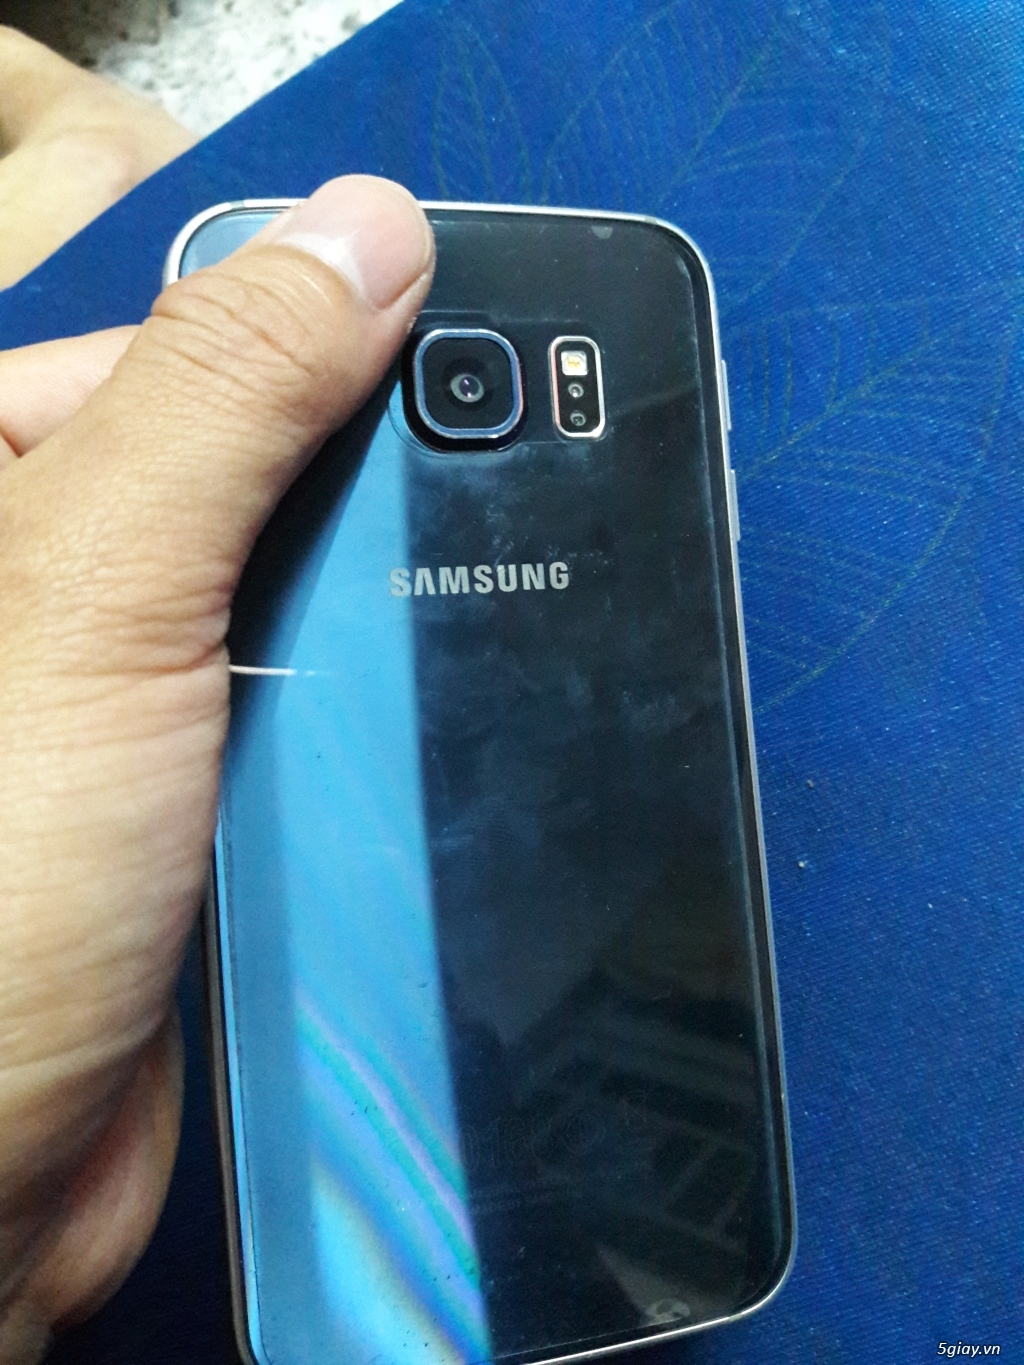 Samsung Galaxy S6 Edge Black Quốc Tế 64GB - 3